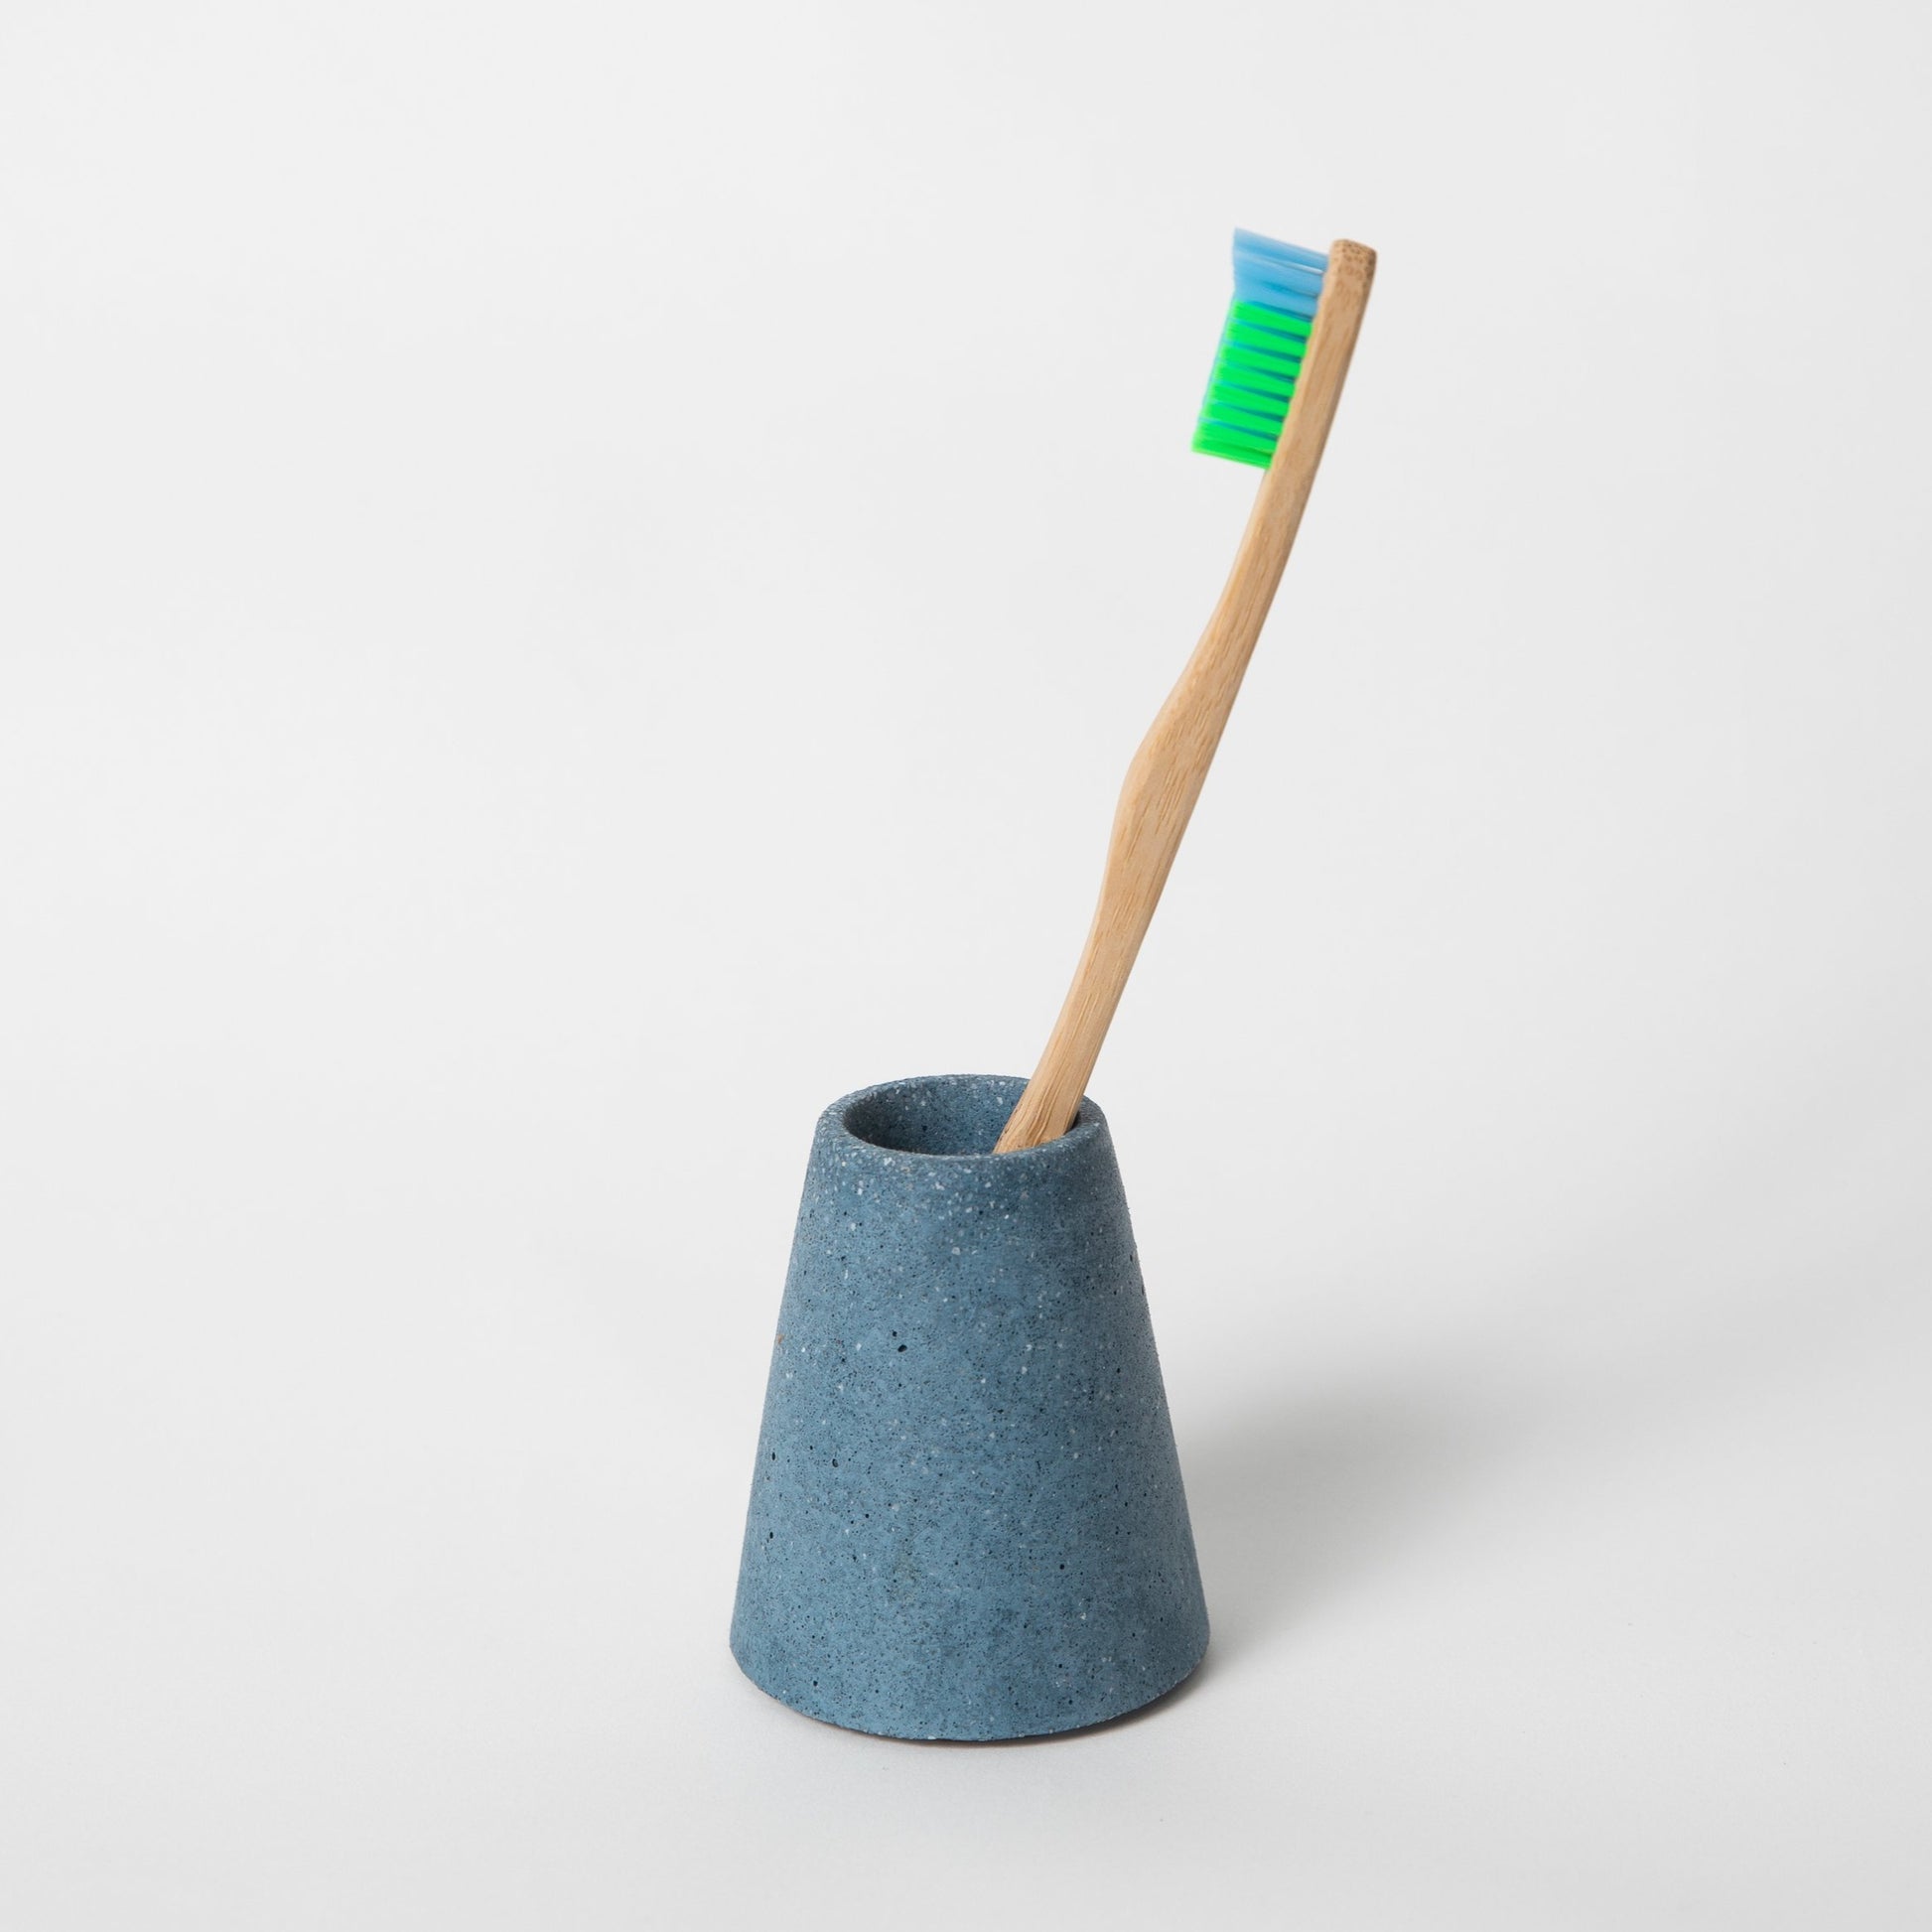 Concrete terrazzo toothbrush holder seen in cobalt terrazzo holding toothbrush.